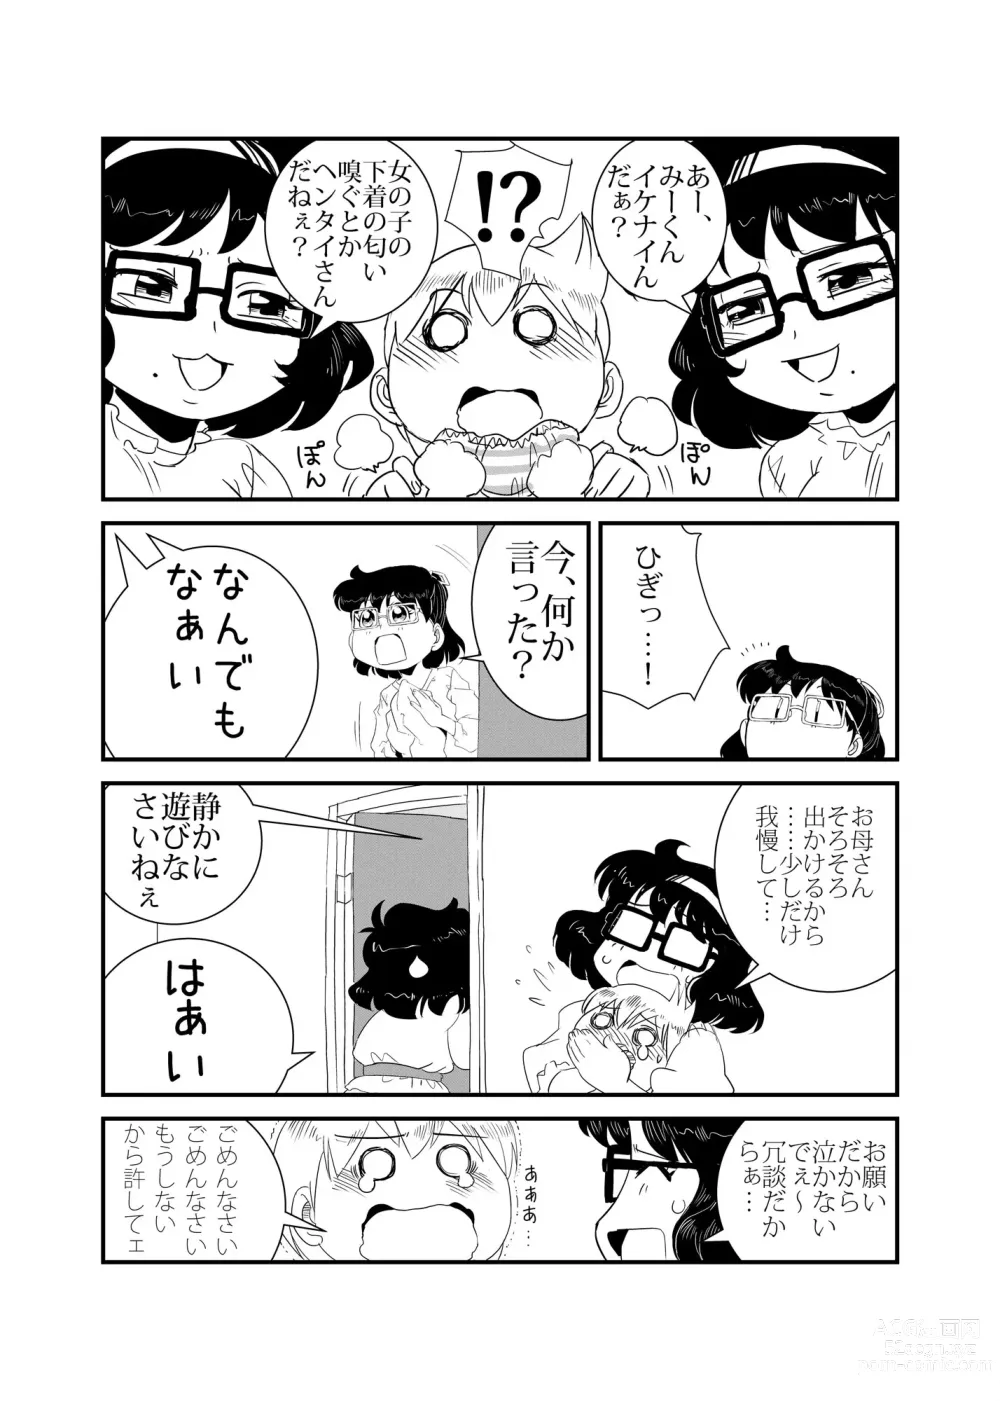 Page 6 of doujinshi TWIN Angel